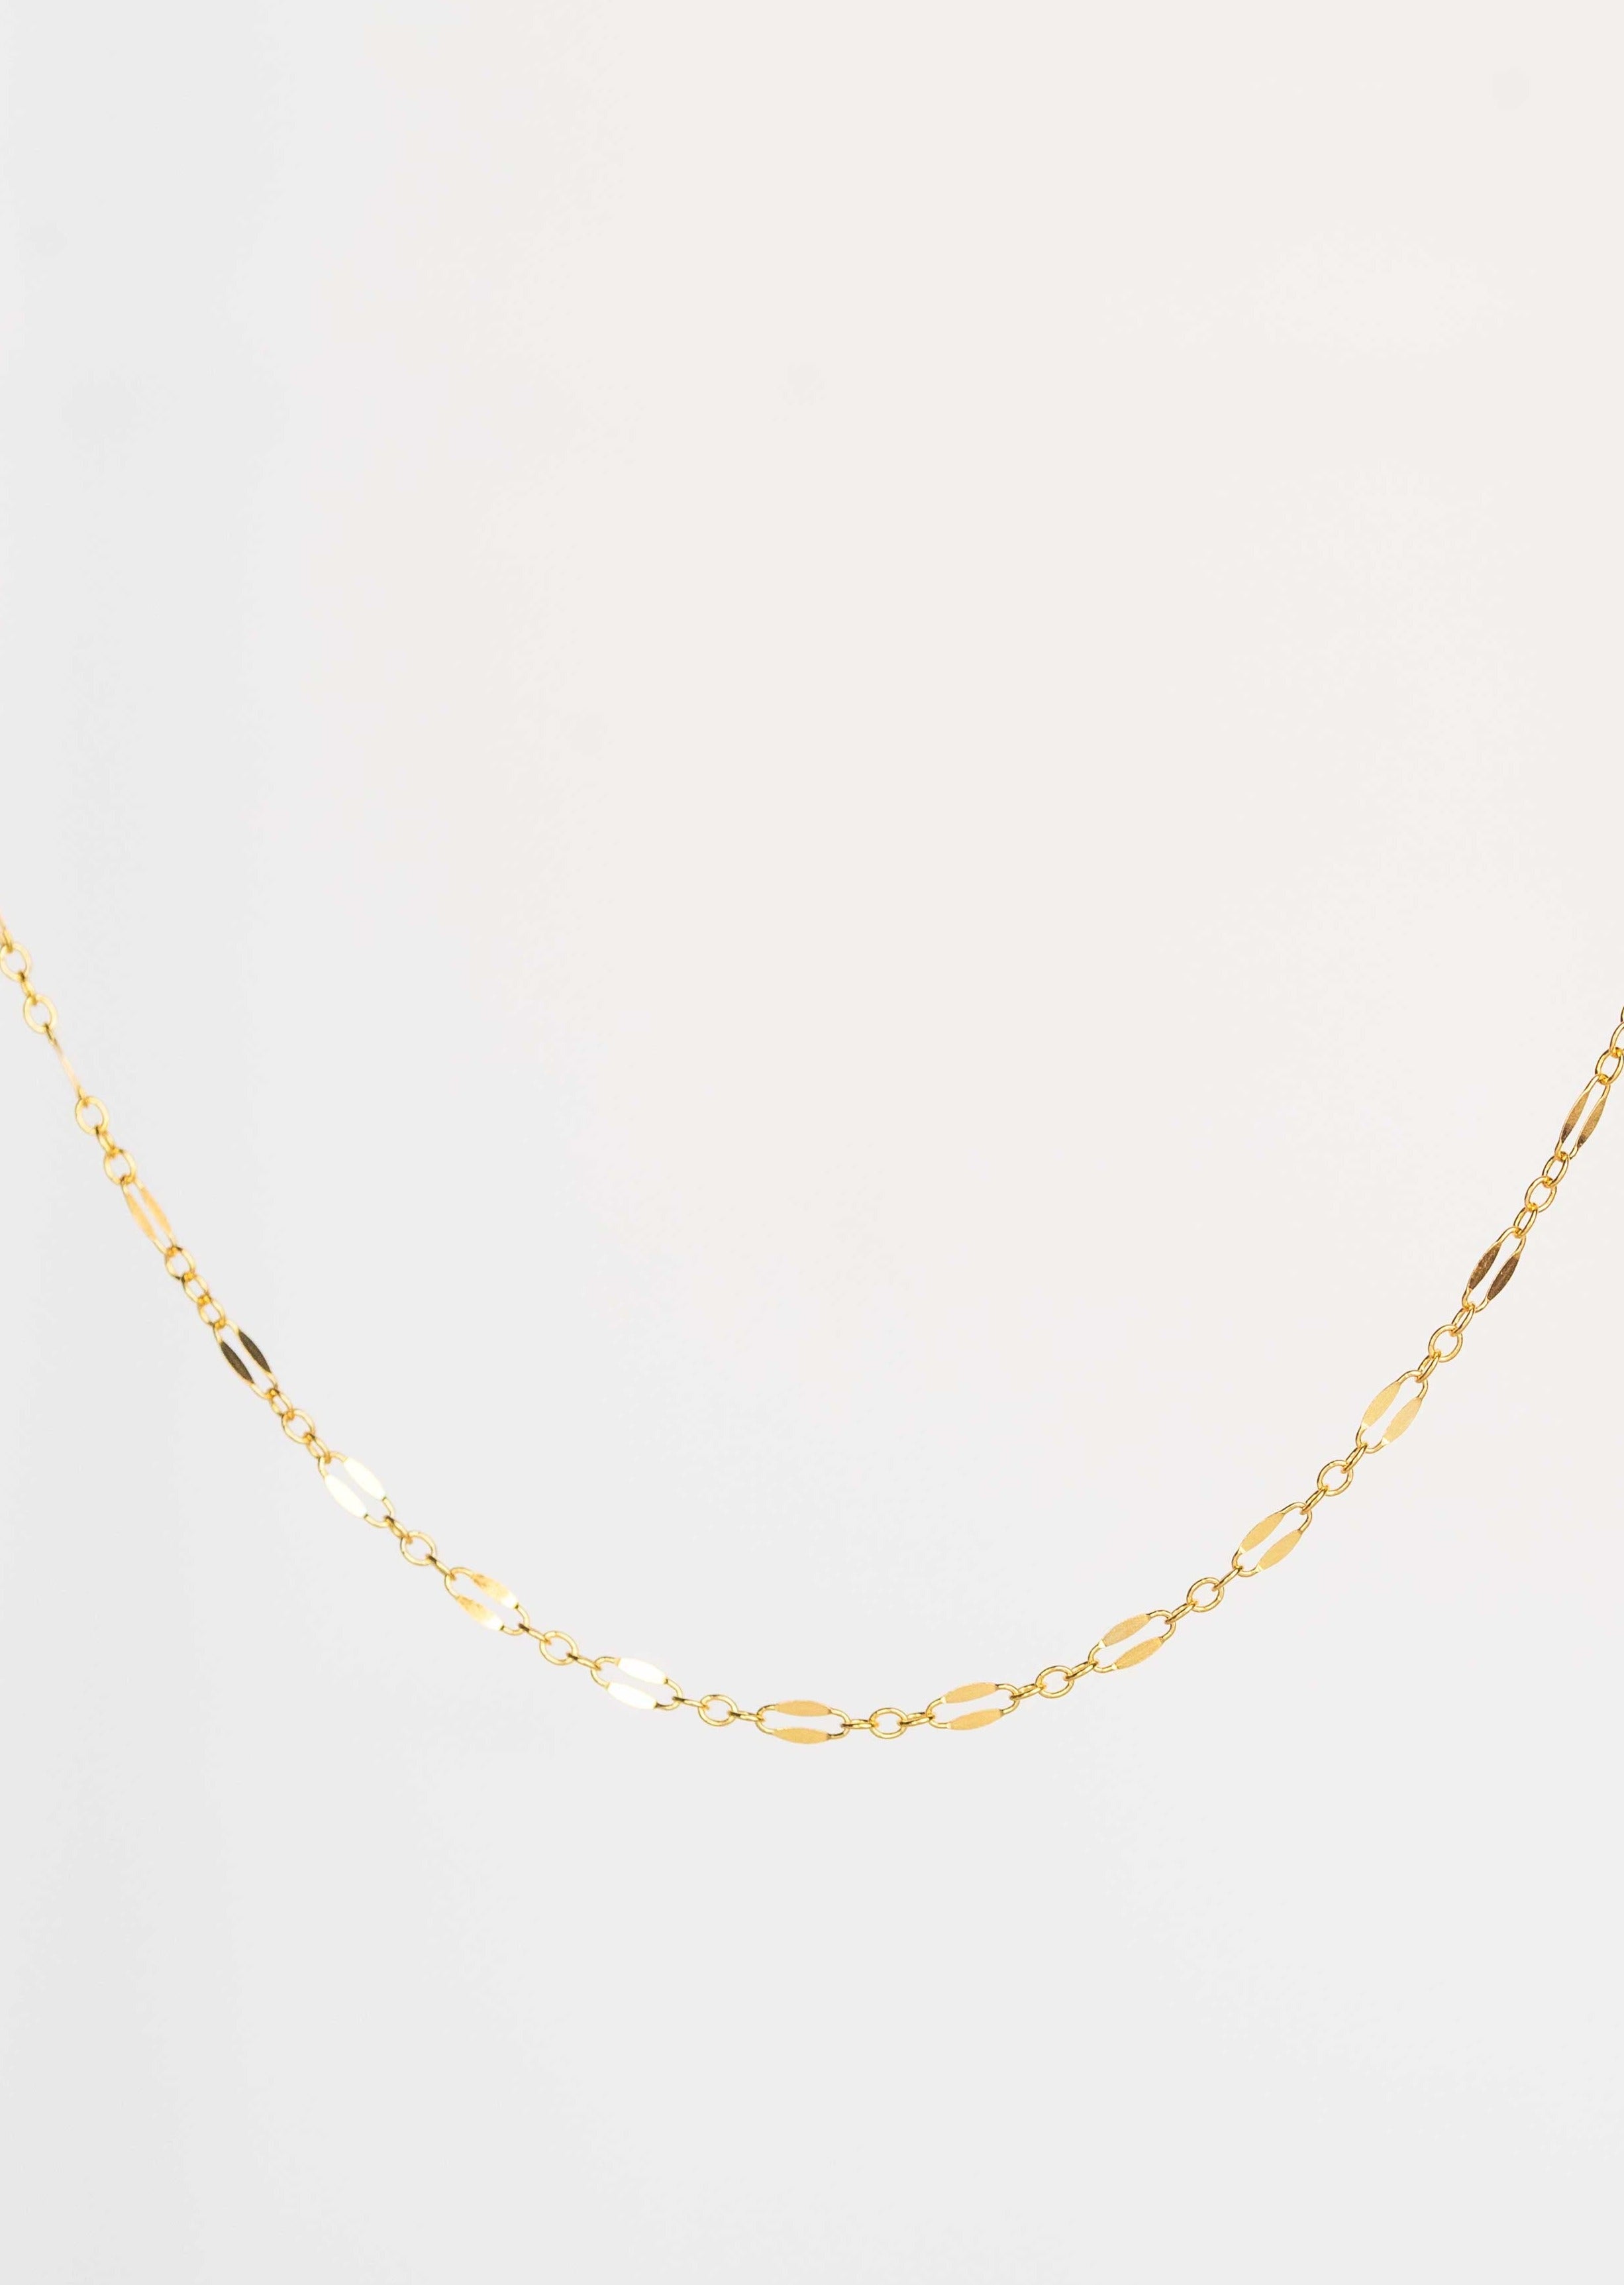 Rose Gold Lariat Necklace Delicate Minimal Bridal Y necklace